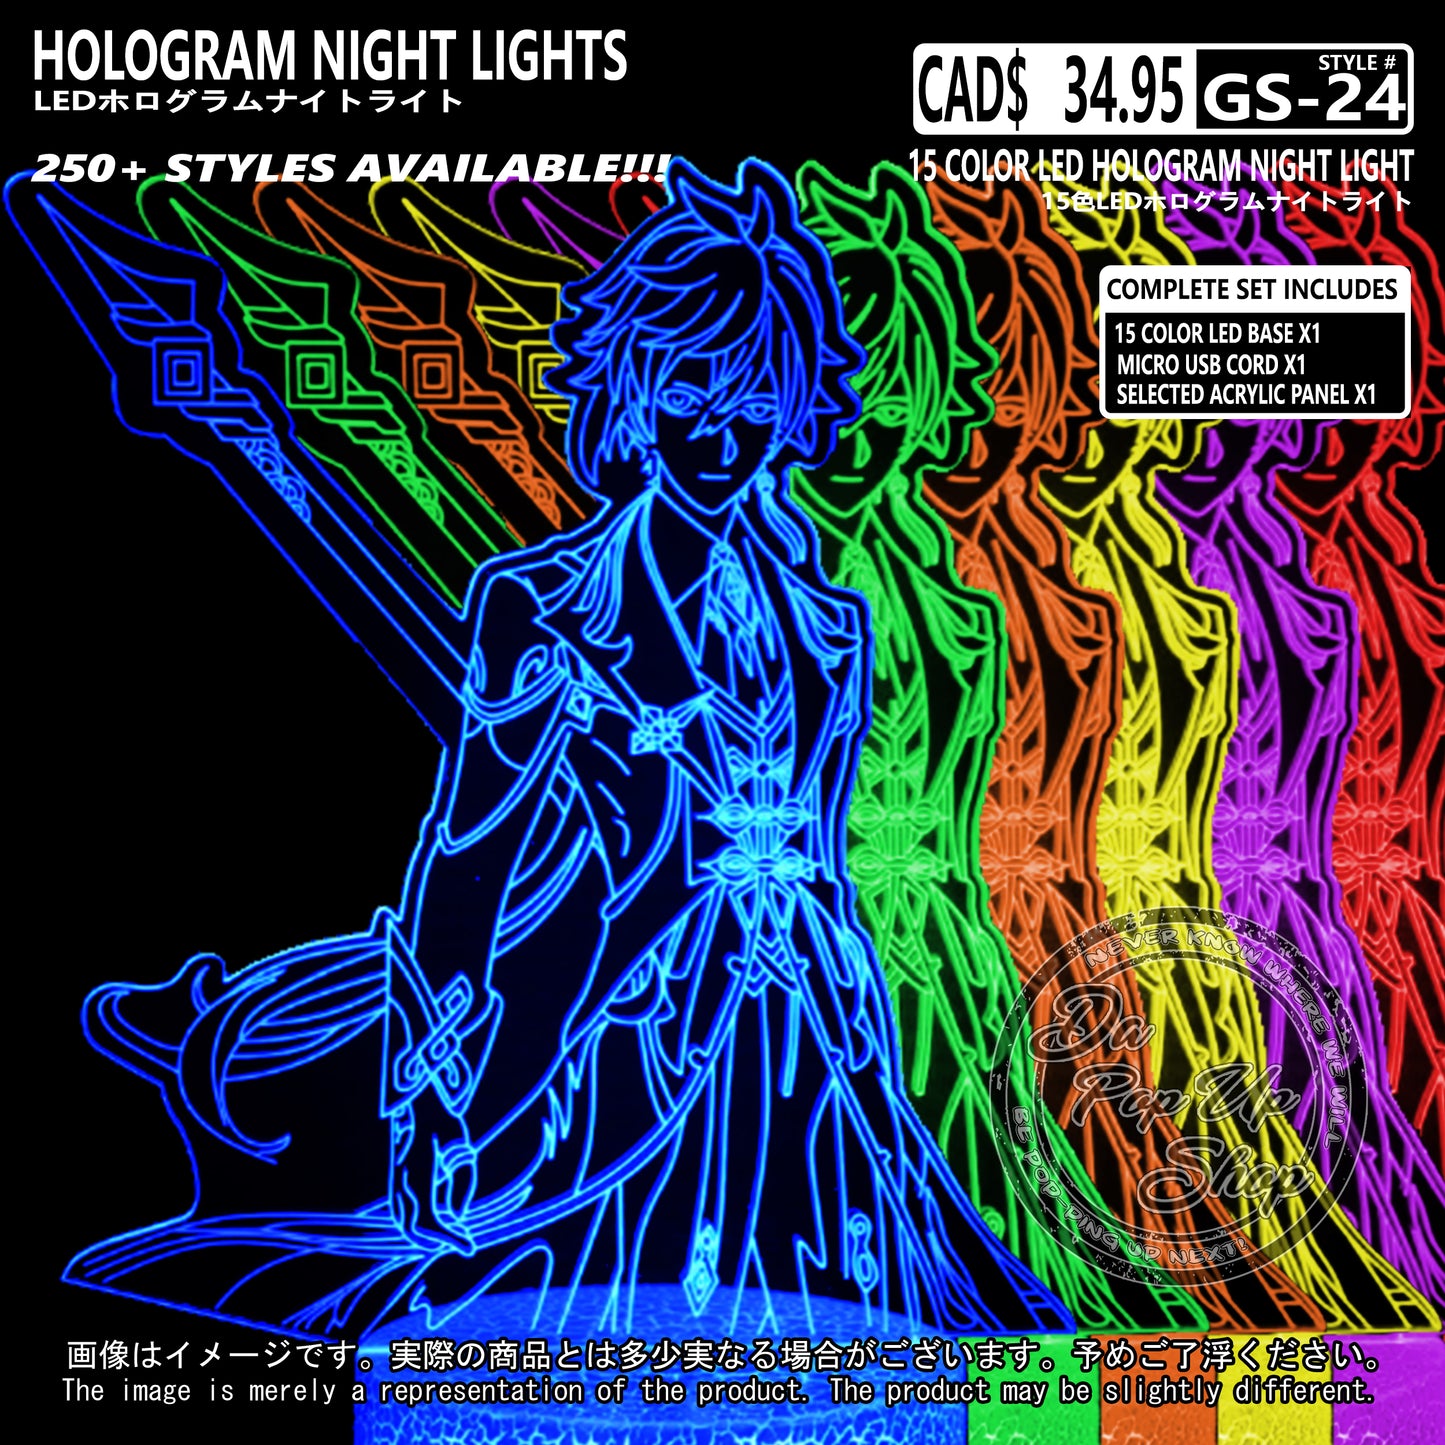 (GS-24) ZHONG LI Genshin Impact Hologram LED Night Light